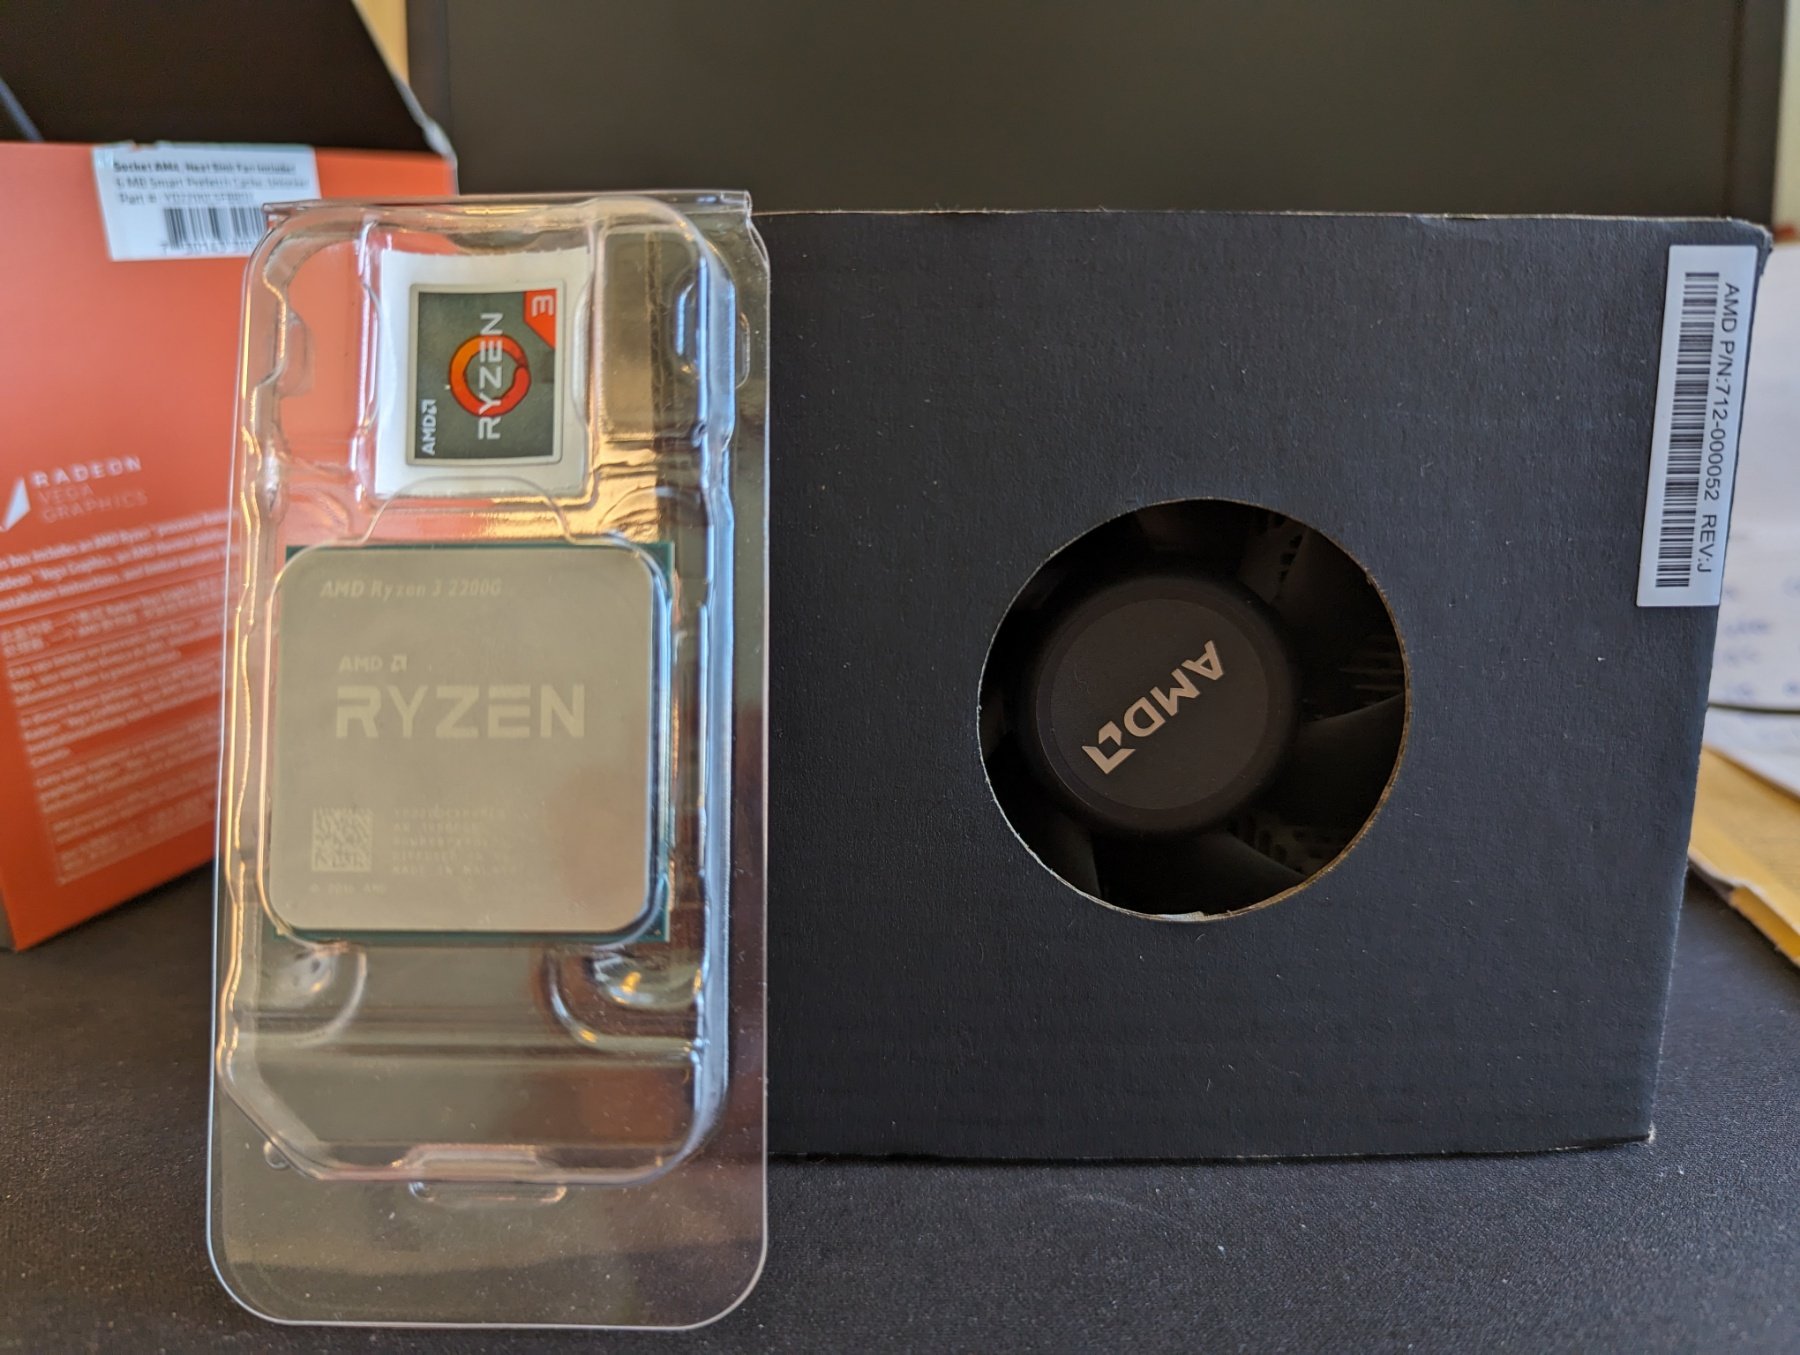 More information about "Πωλείται AMD Ryzen 3 2200G"